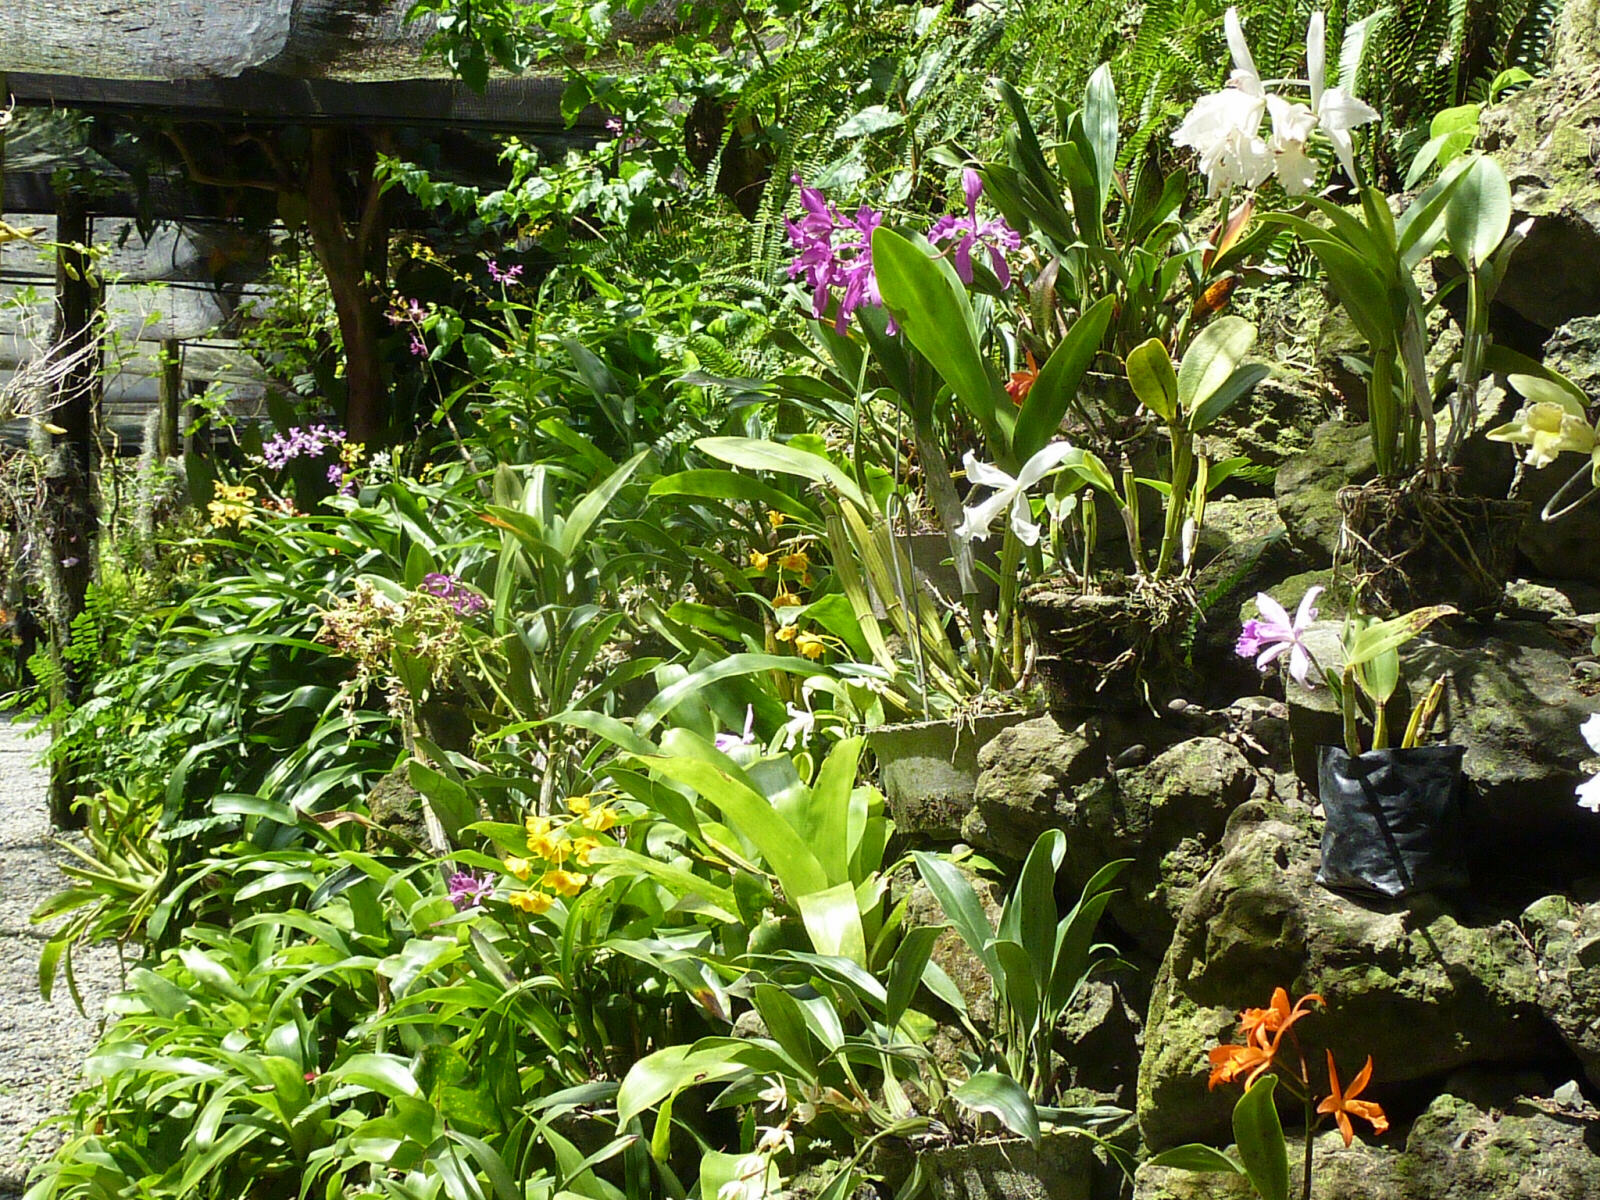 The Garden of the Sleeping Giant near Nadi, Fiji